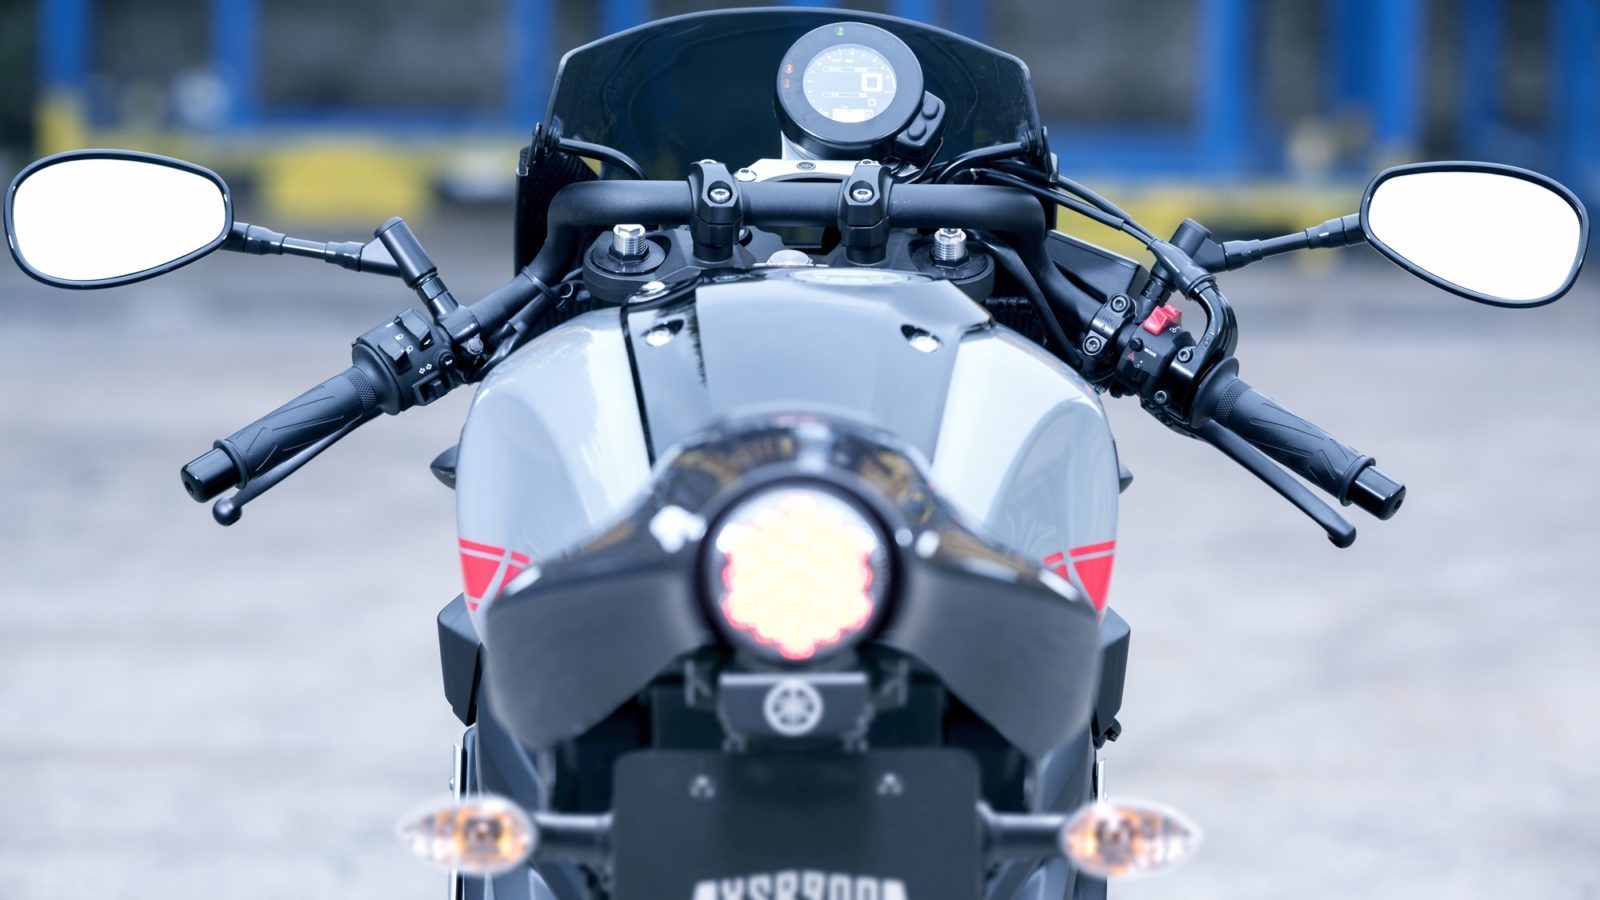 guidon bas pour low rider s Yamaha-XSR900-abarth-test-avis-essai-prix-vitesse-chevaux-6-1600x900